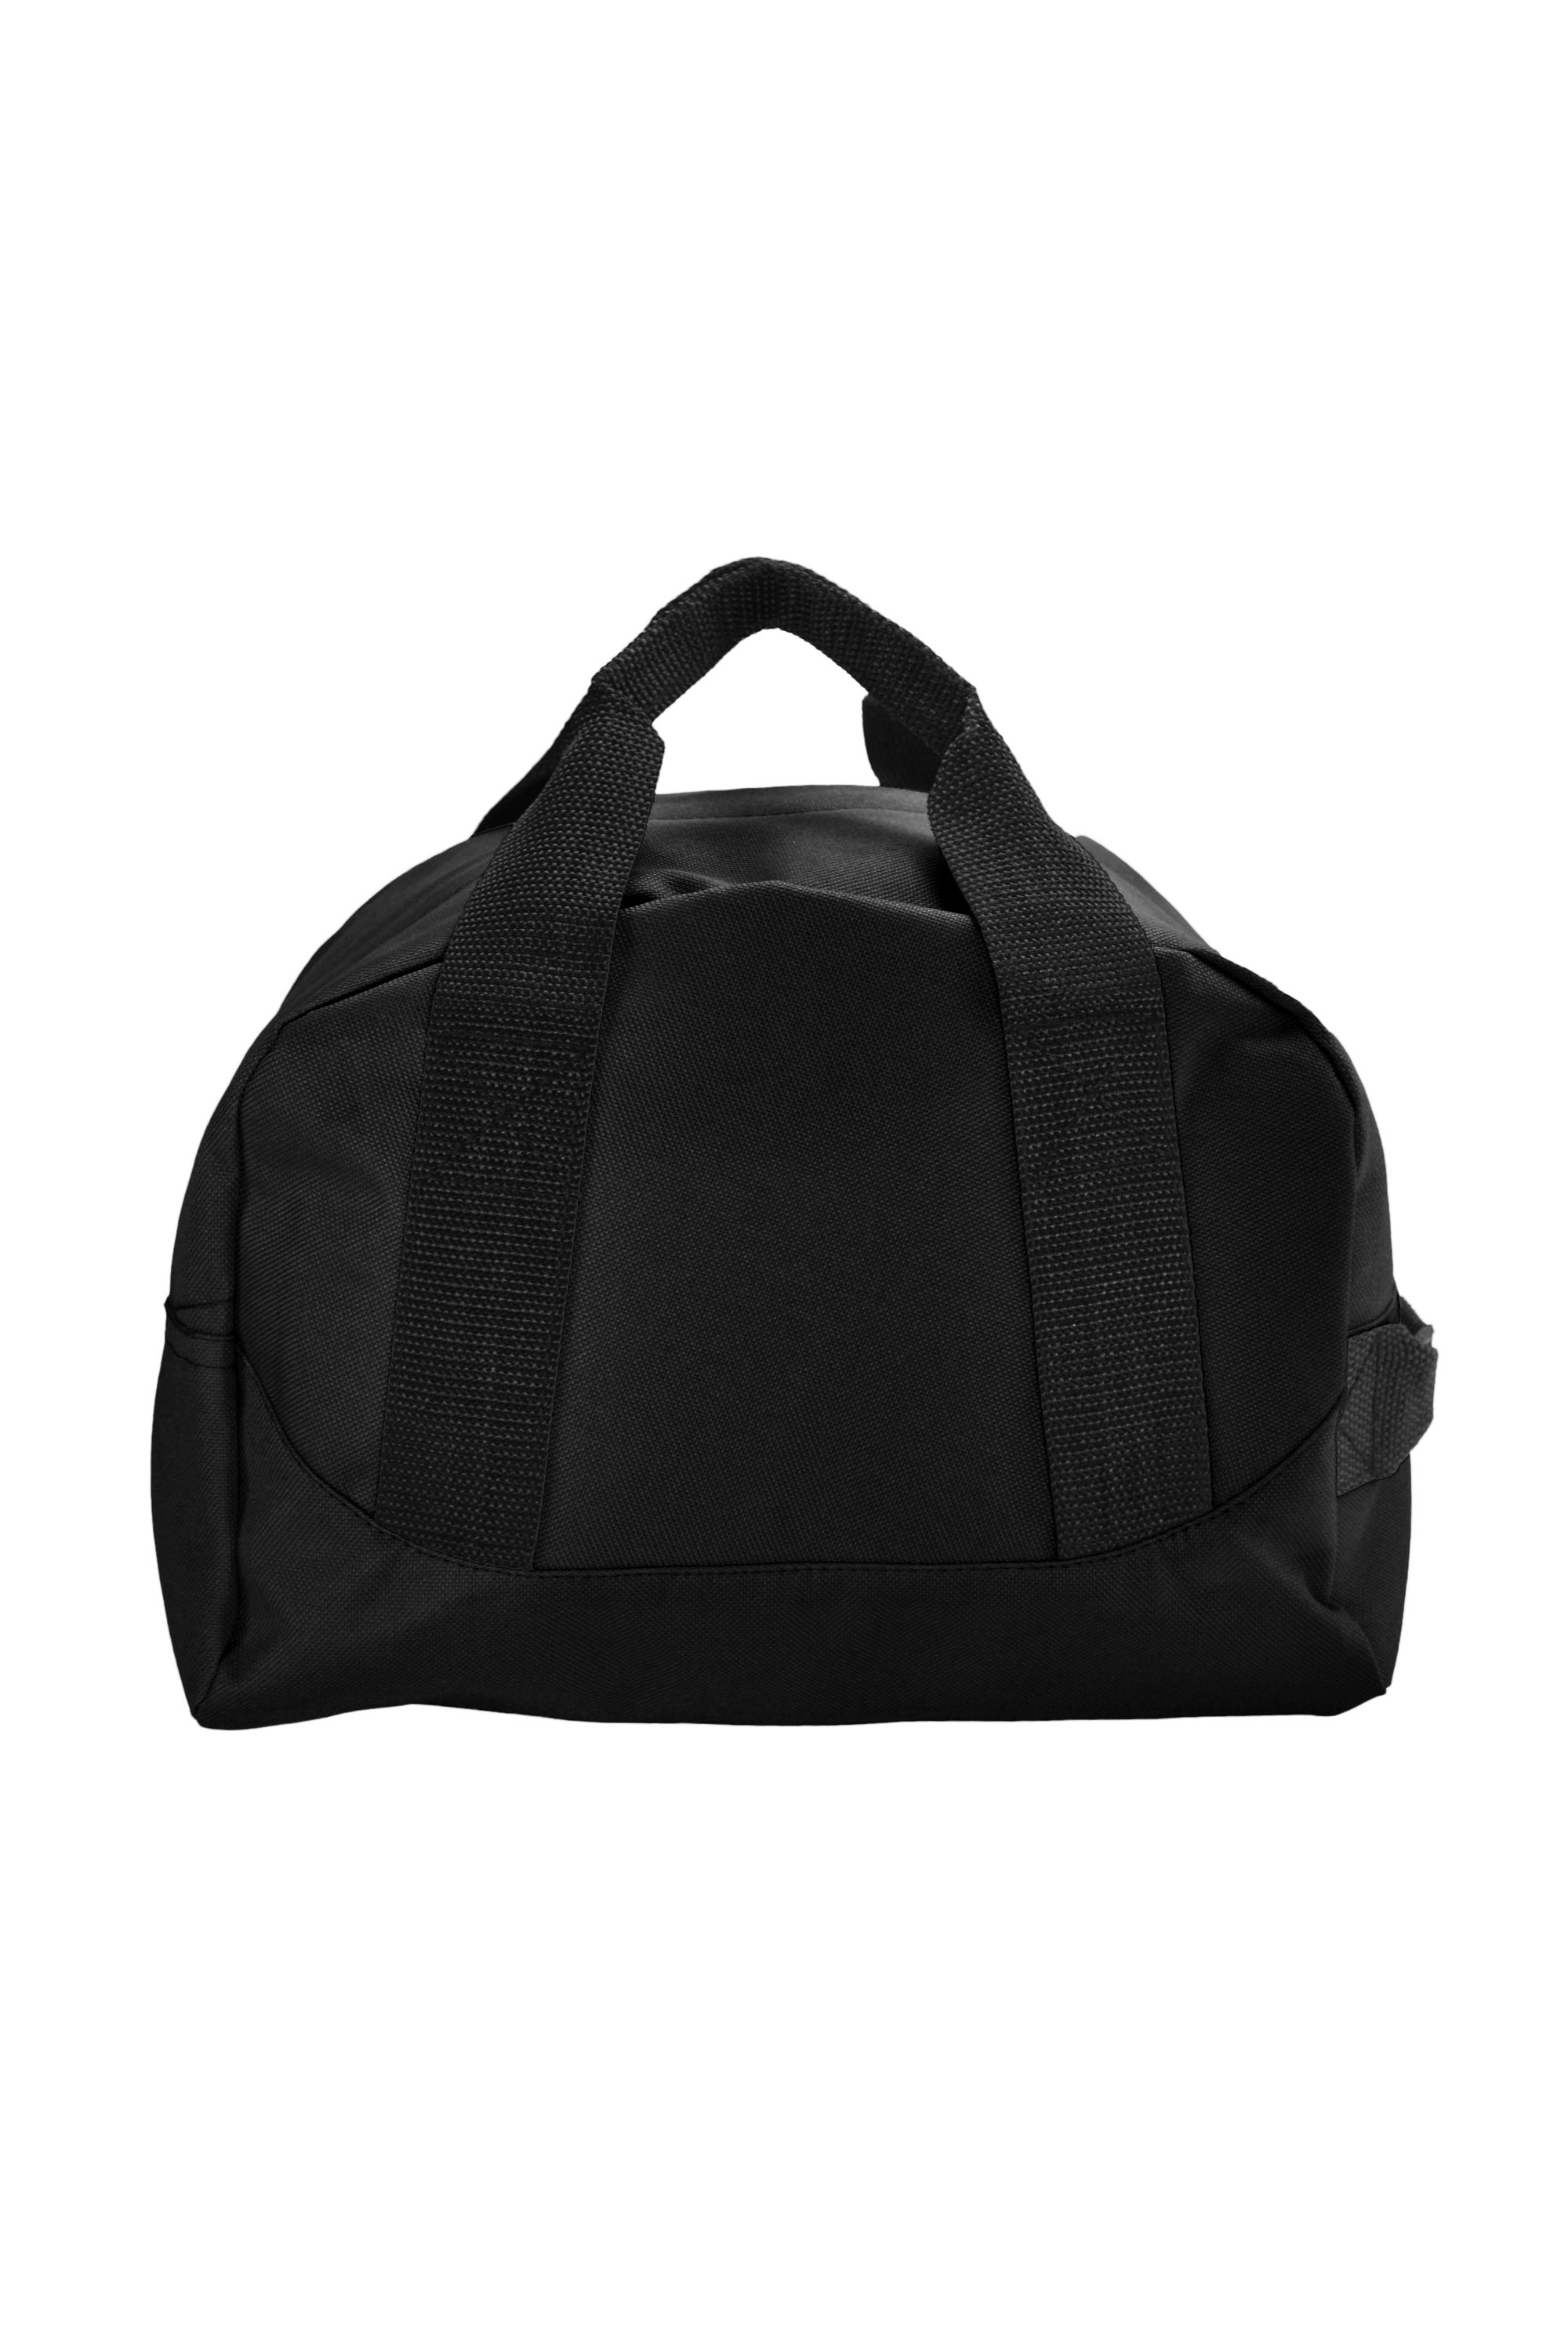 DALIX 12" Mini Duffel Bag Gym Duffle in Black - image 3 of 8